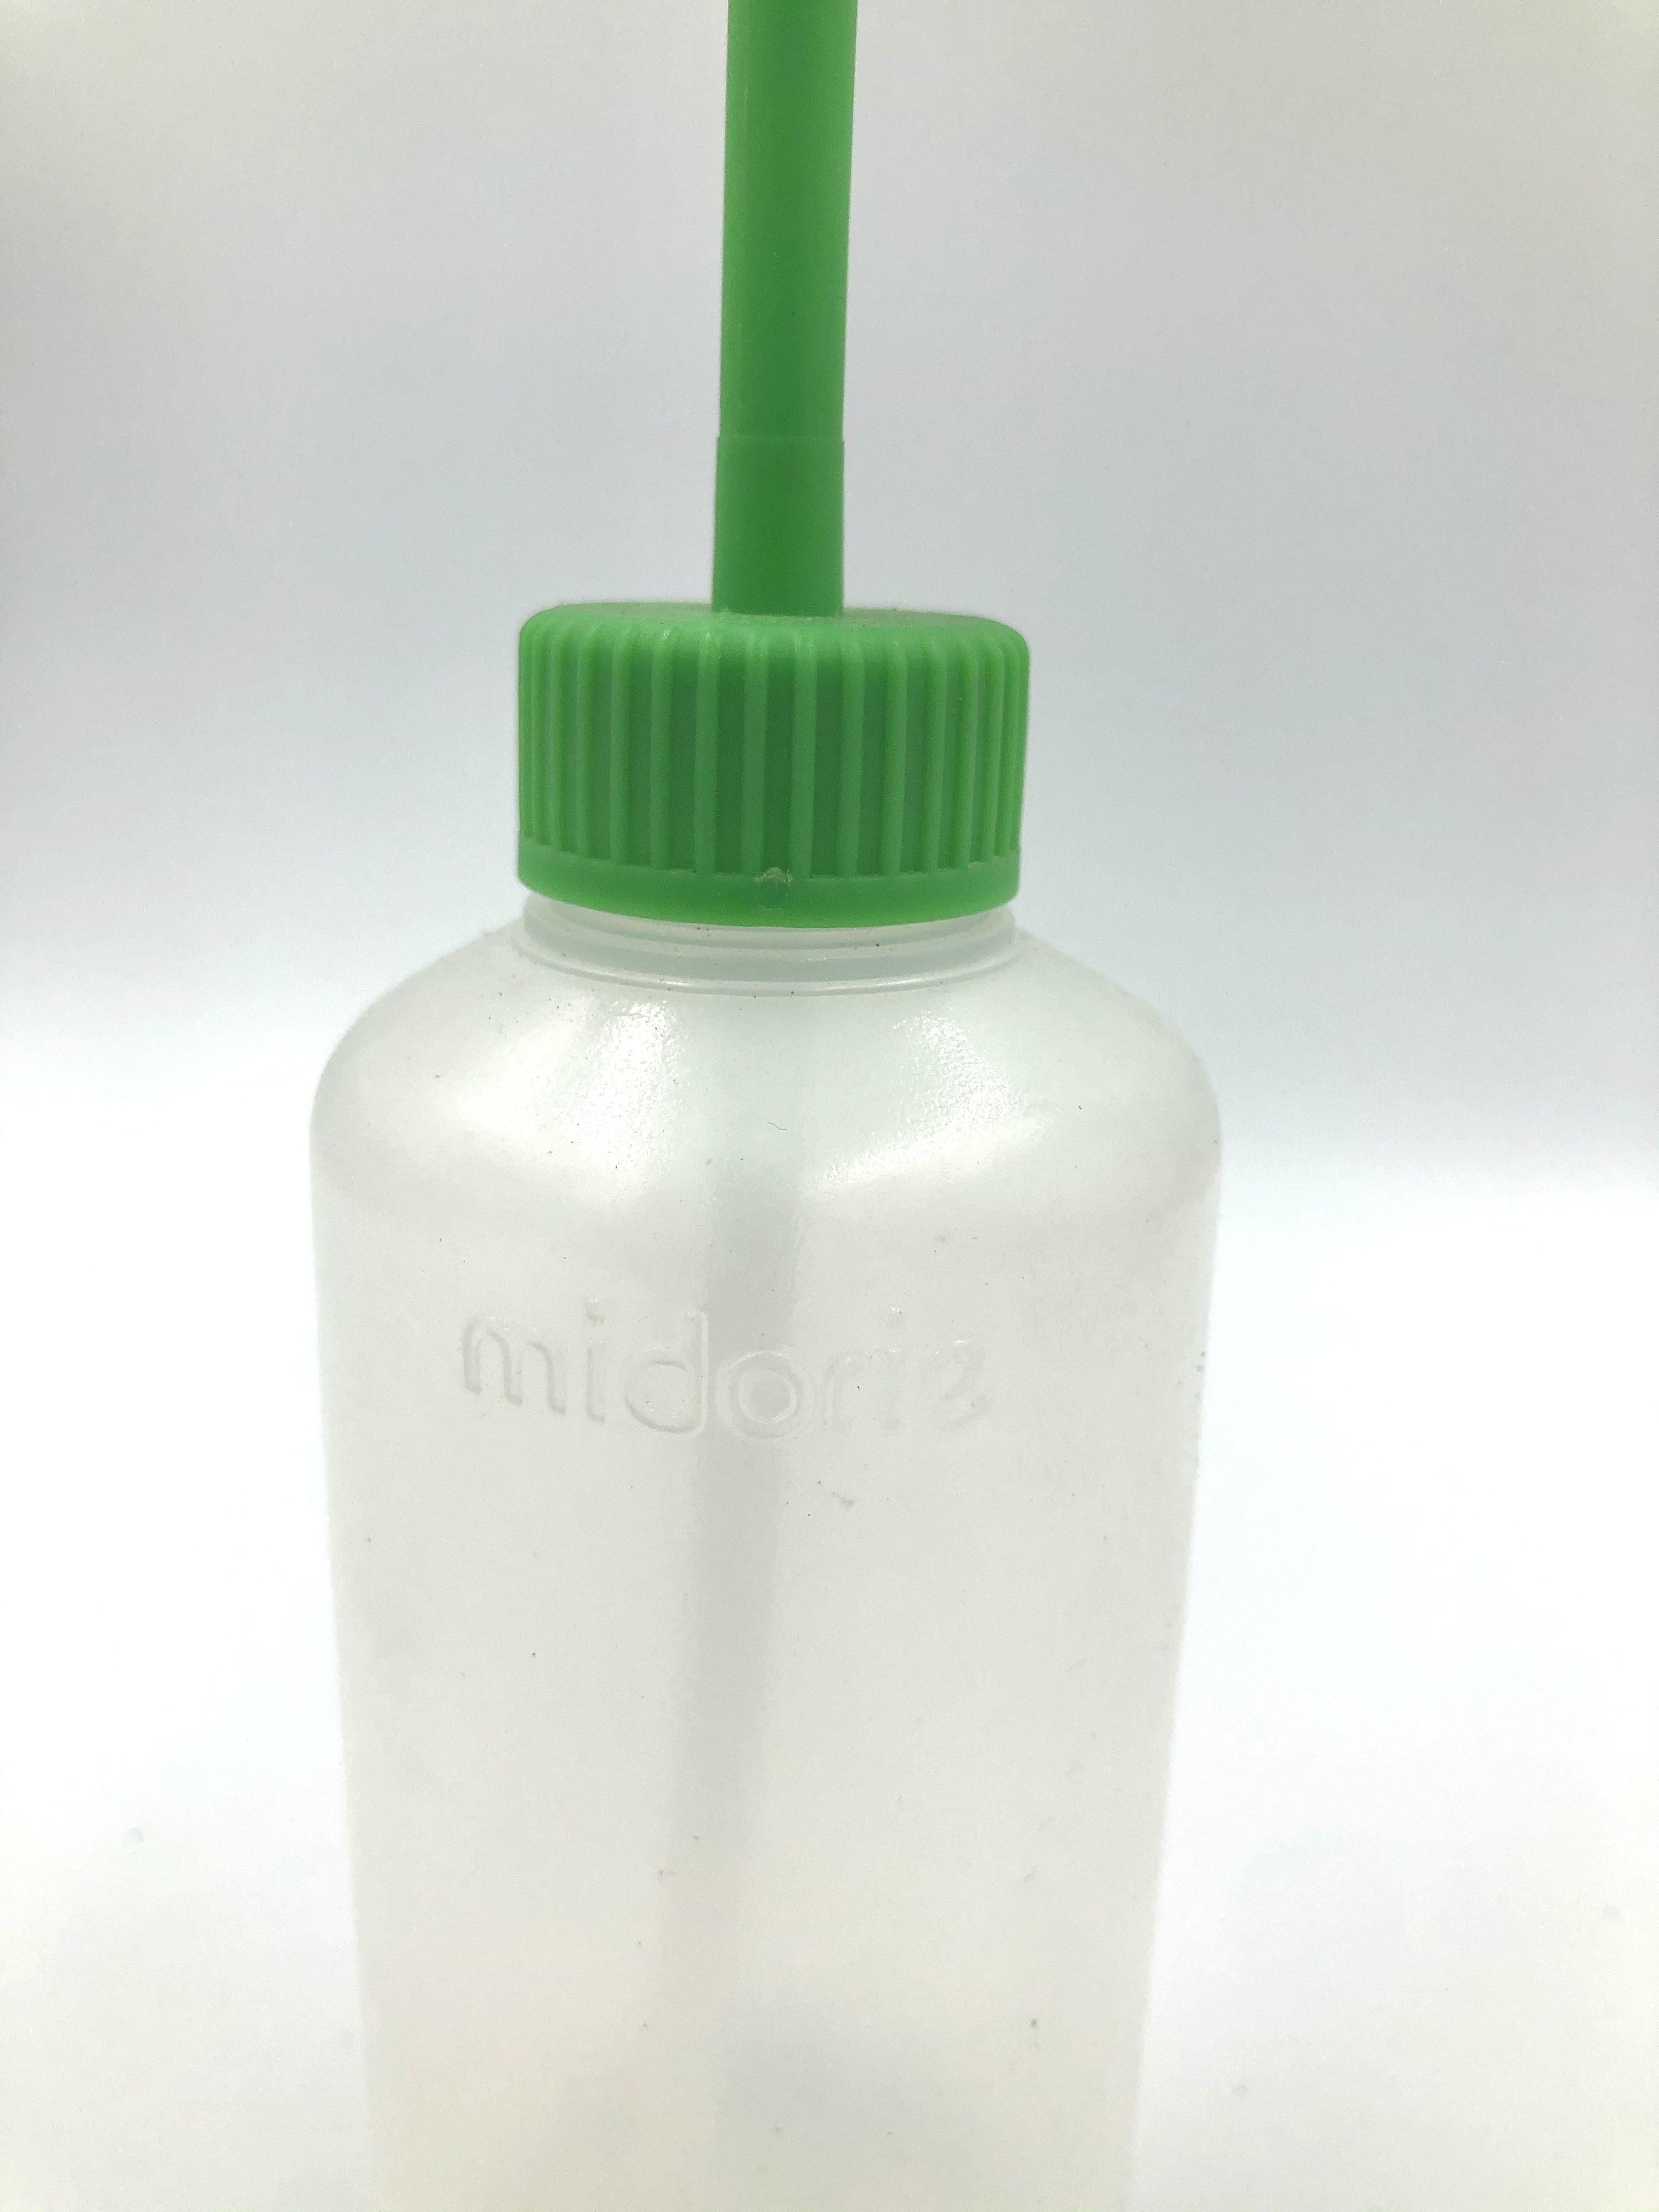 Midorie Squeeze Bottle - Midorie Singapore